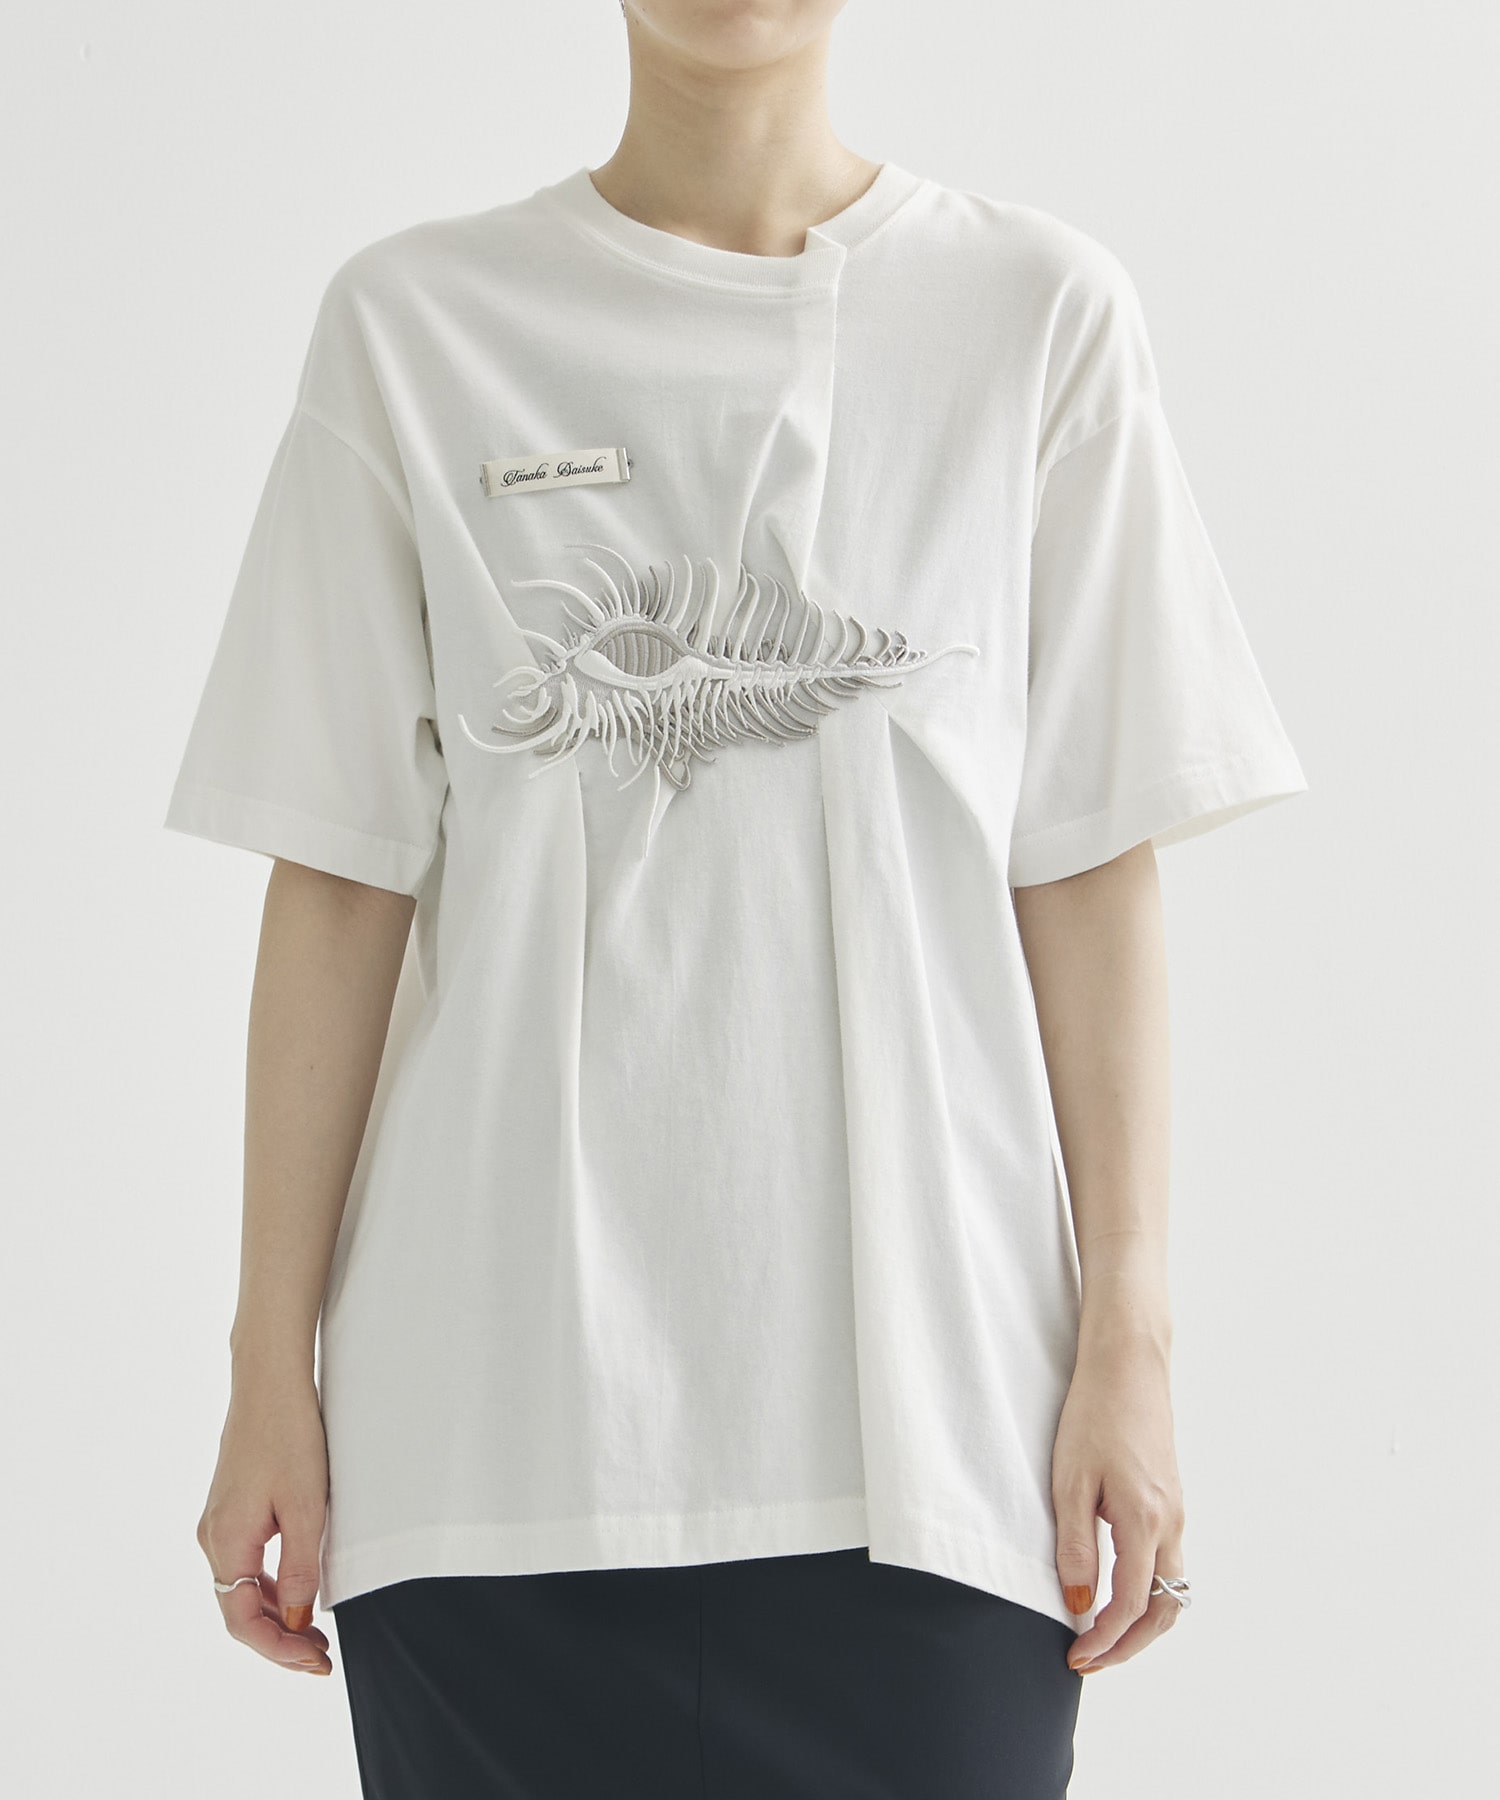 AKKIGAI on White T-shirt